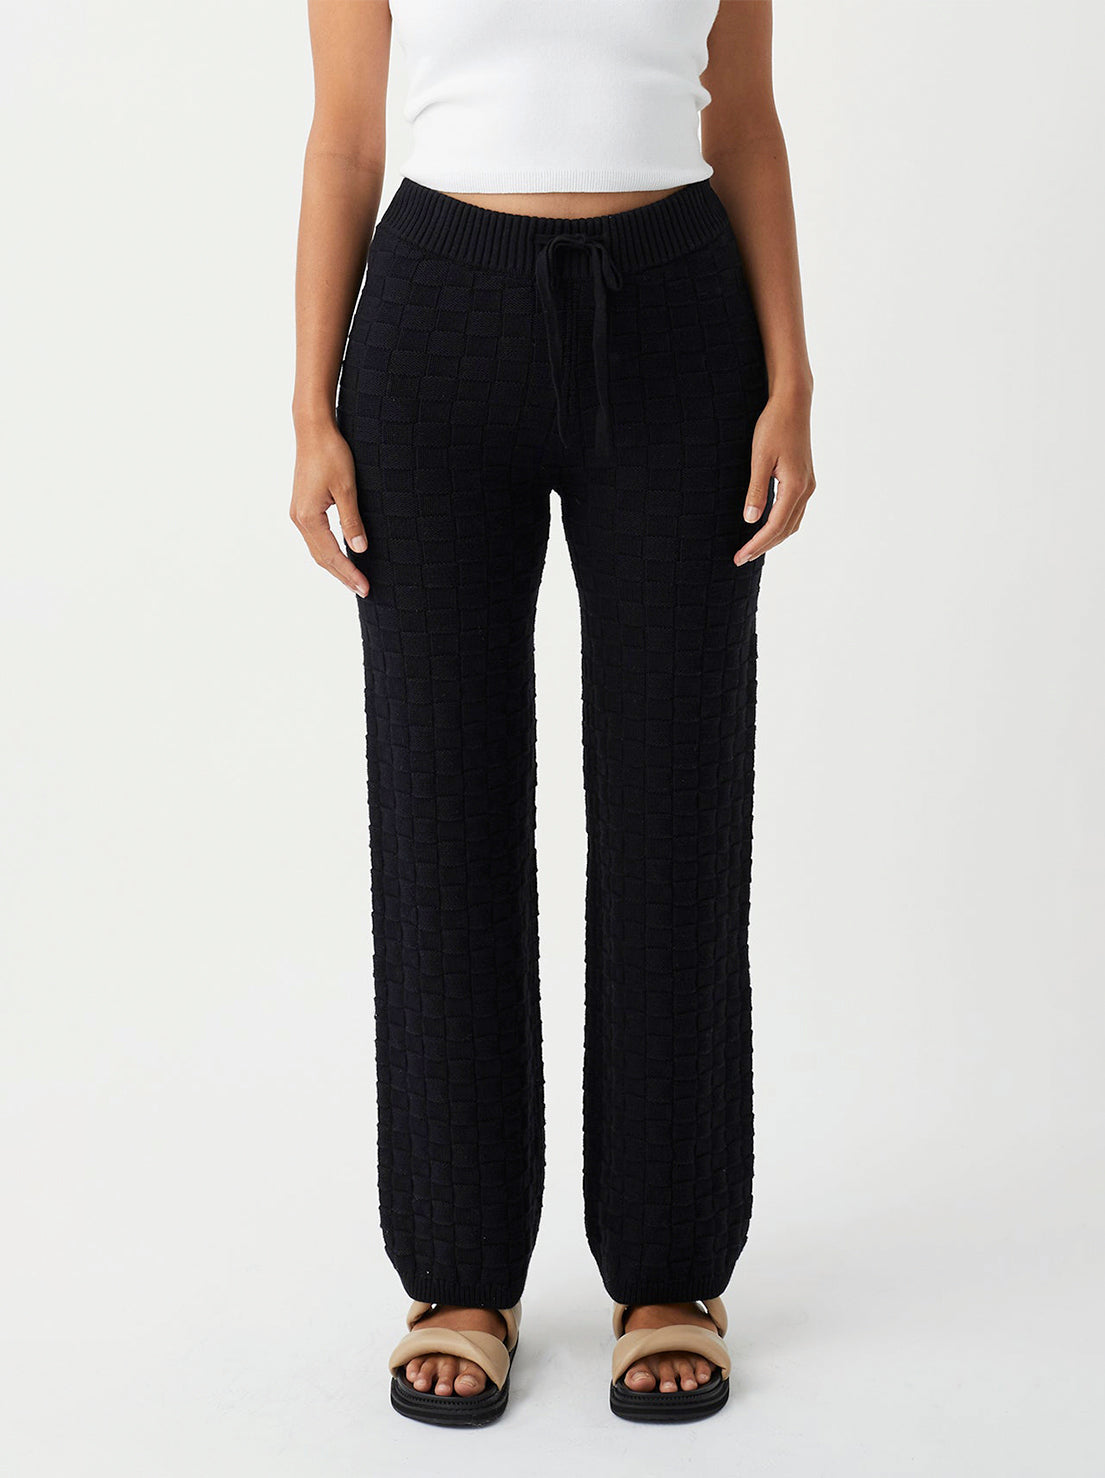 Arcaa Movement - Sierra Organic Knit Pant - Black